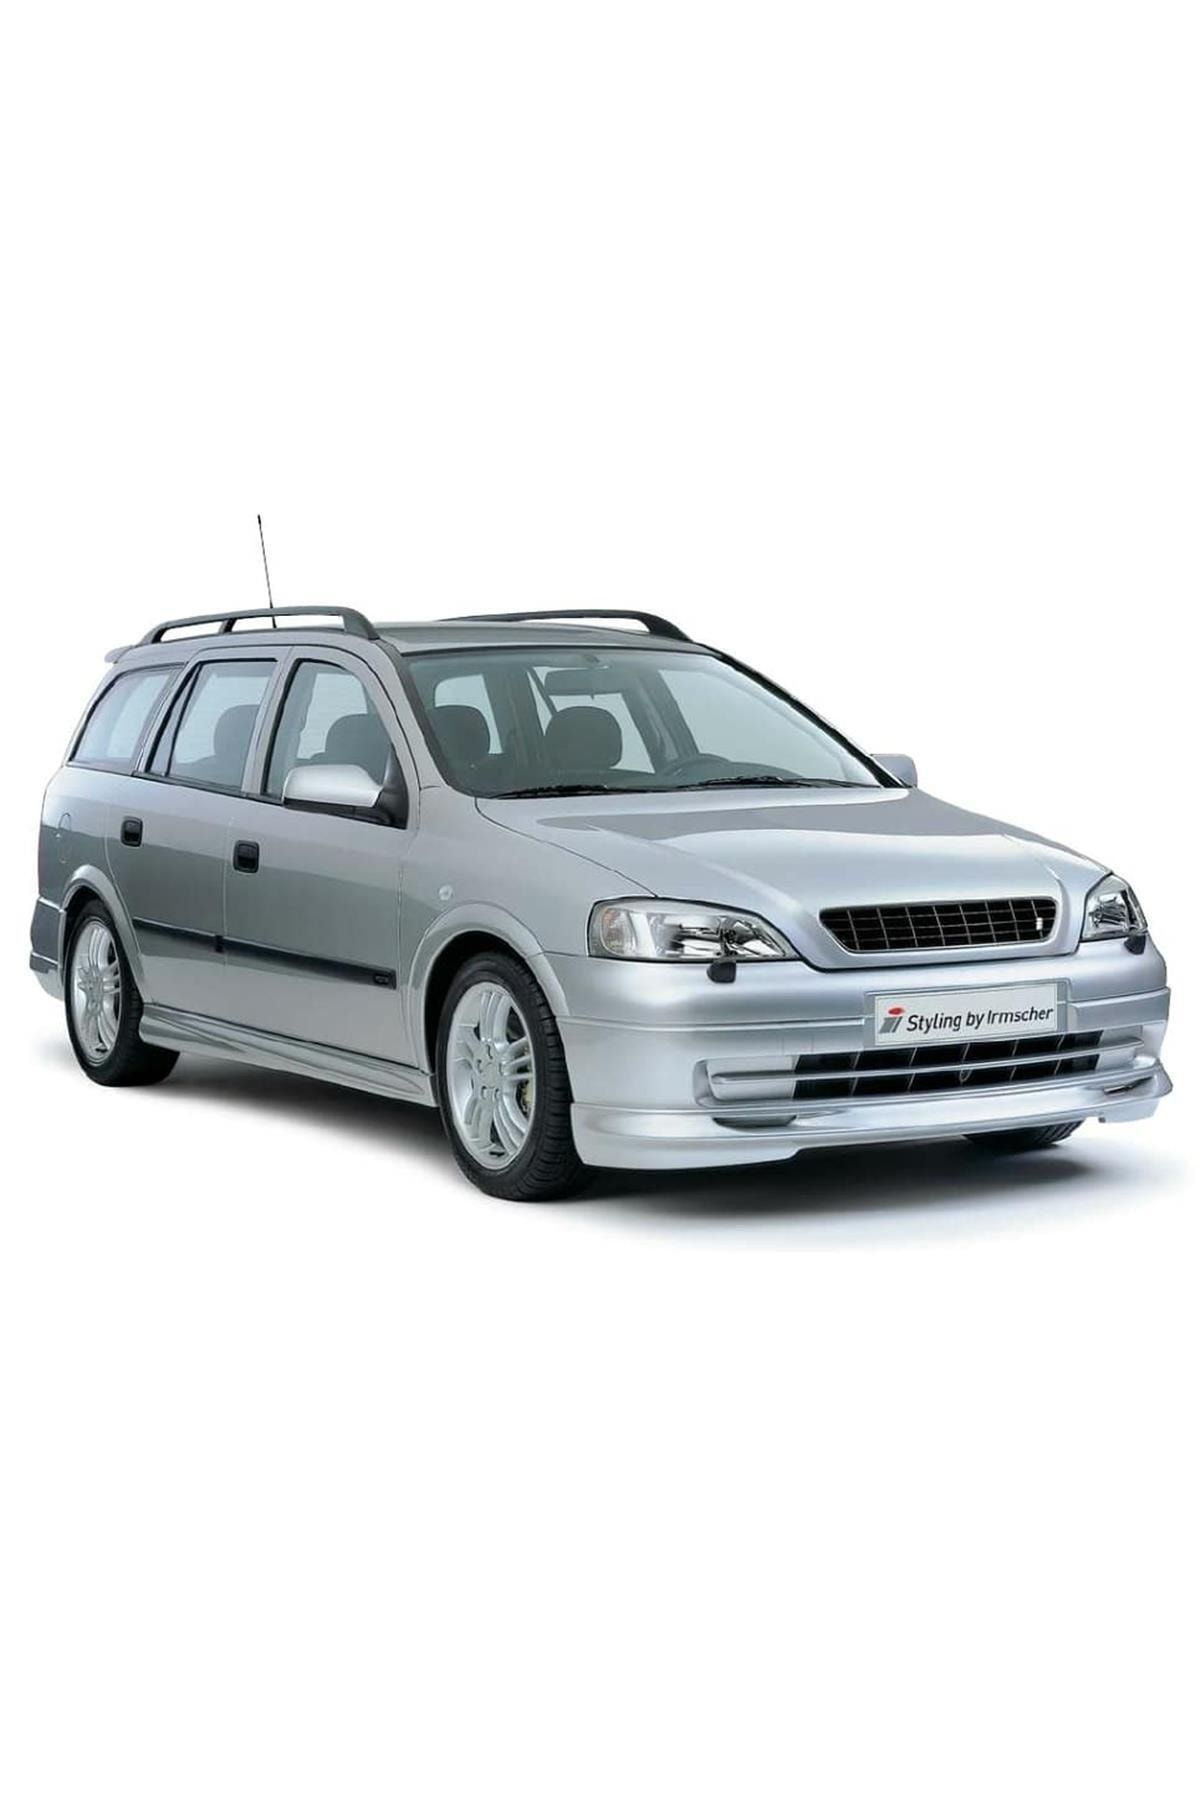 Opel Astra G Sedan - Hb - Sw Uyumlu (1998-2009) Irmscher Ön Tampon Ek (plastik)_1